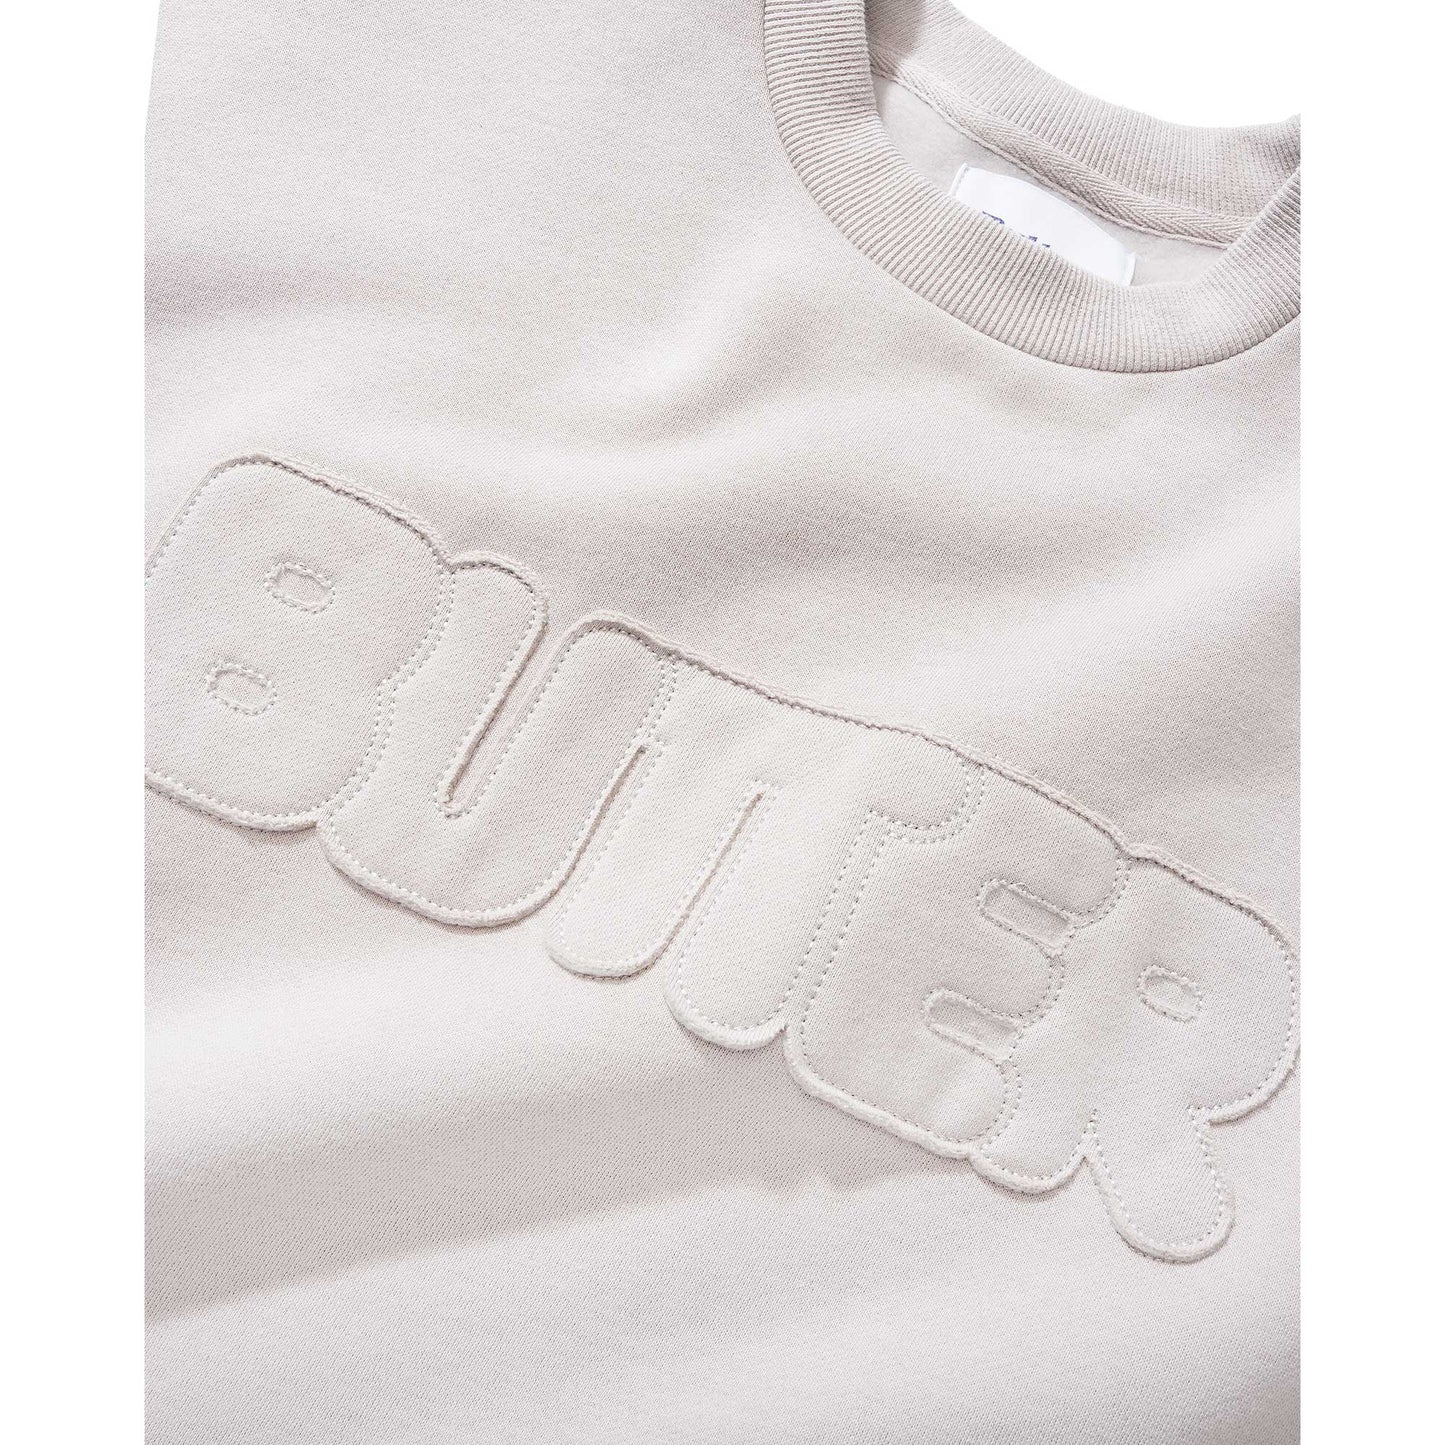 Butter Goods Fabric Applique Crewneck Sweatshirt, cement - Tiki Room Skateboards - 2